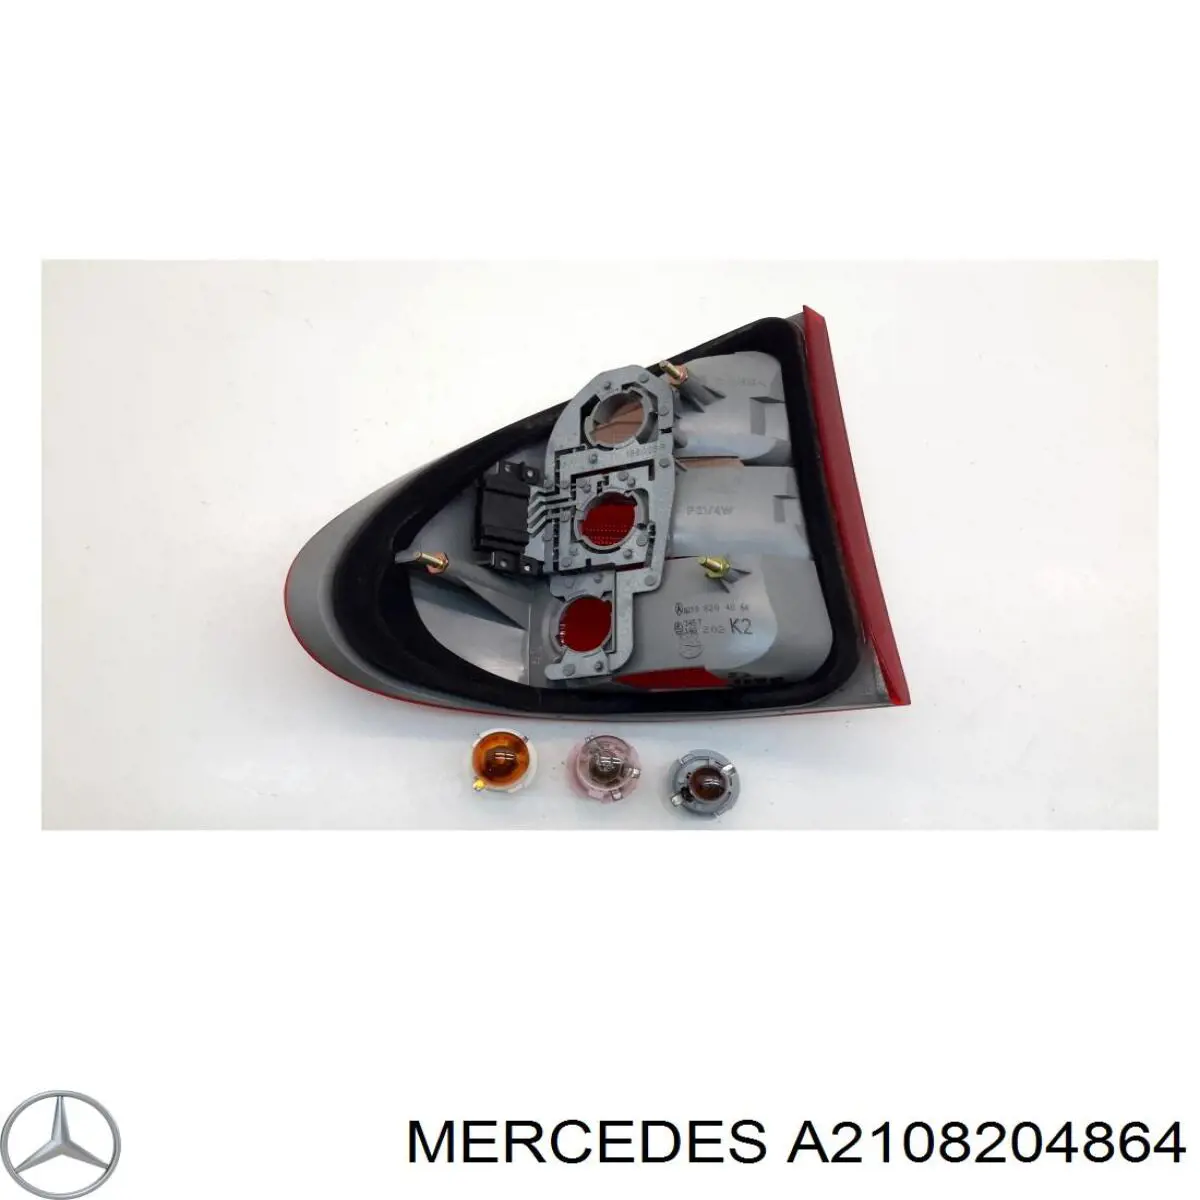 A2108204864 Mercedes piloto posterior exterior derecho